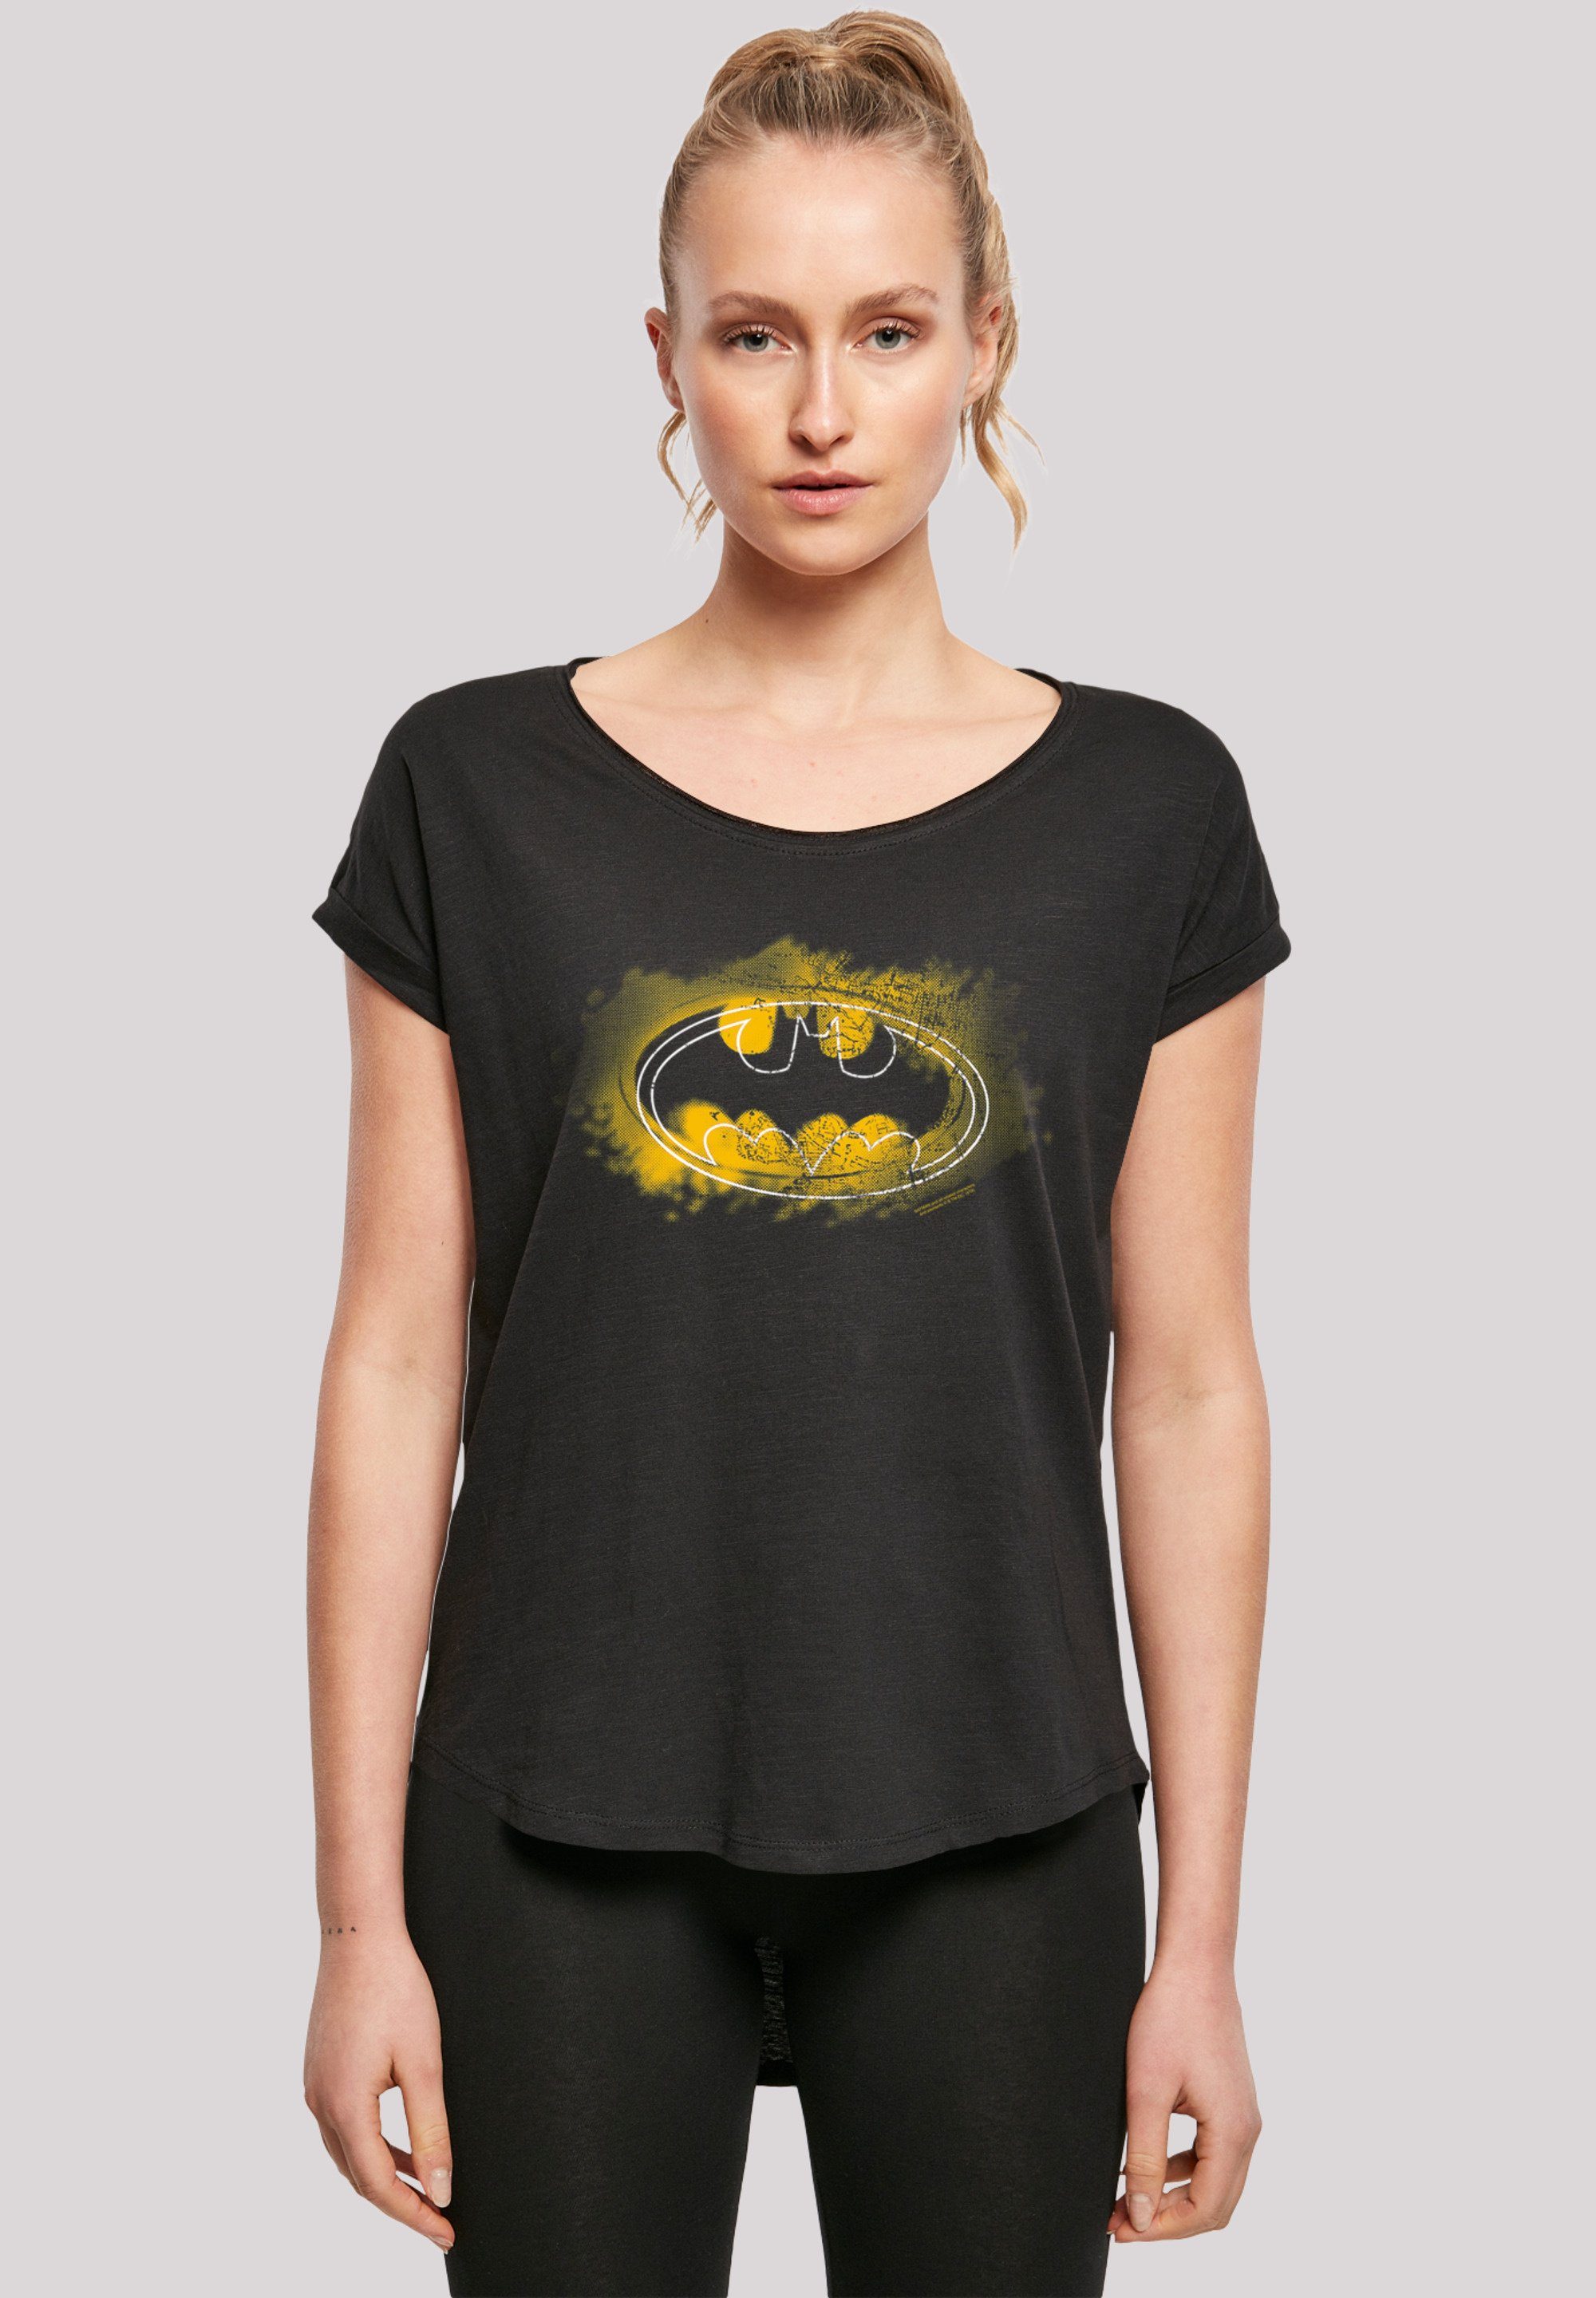 F4NT4STIC T-Shirt DC Comics Batman Spray Logo Print, Sehr weicher  Baumwollstoff mit hohem Tragekomfort